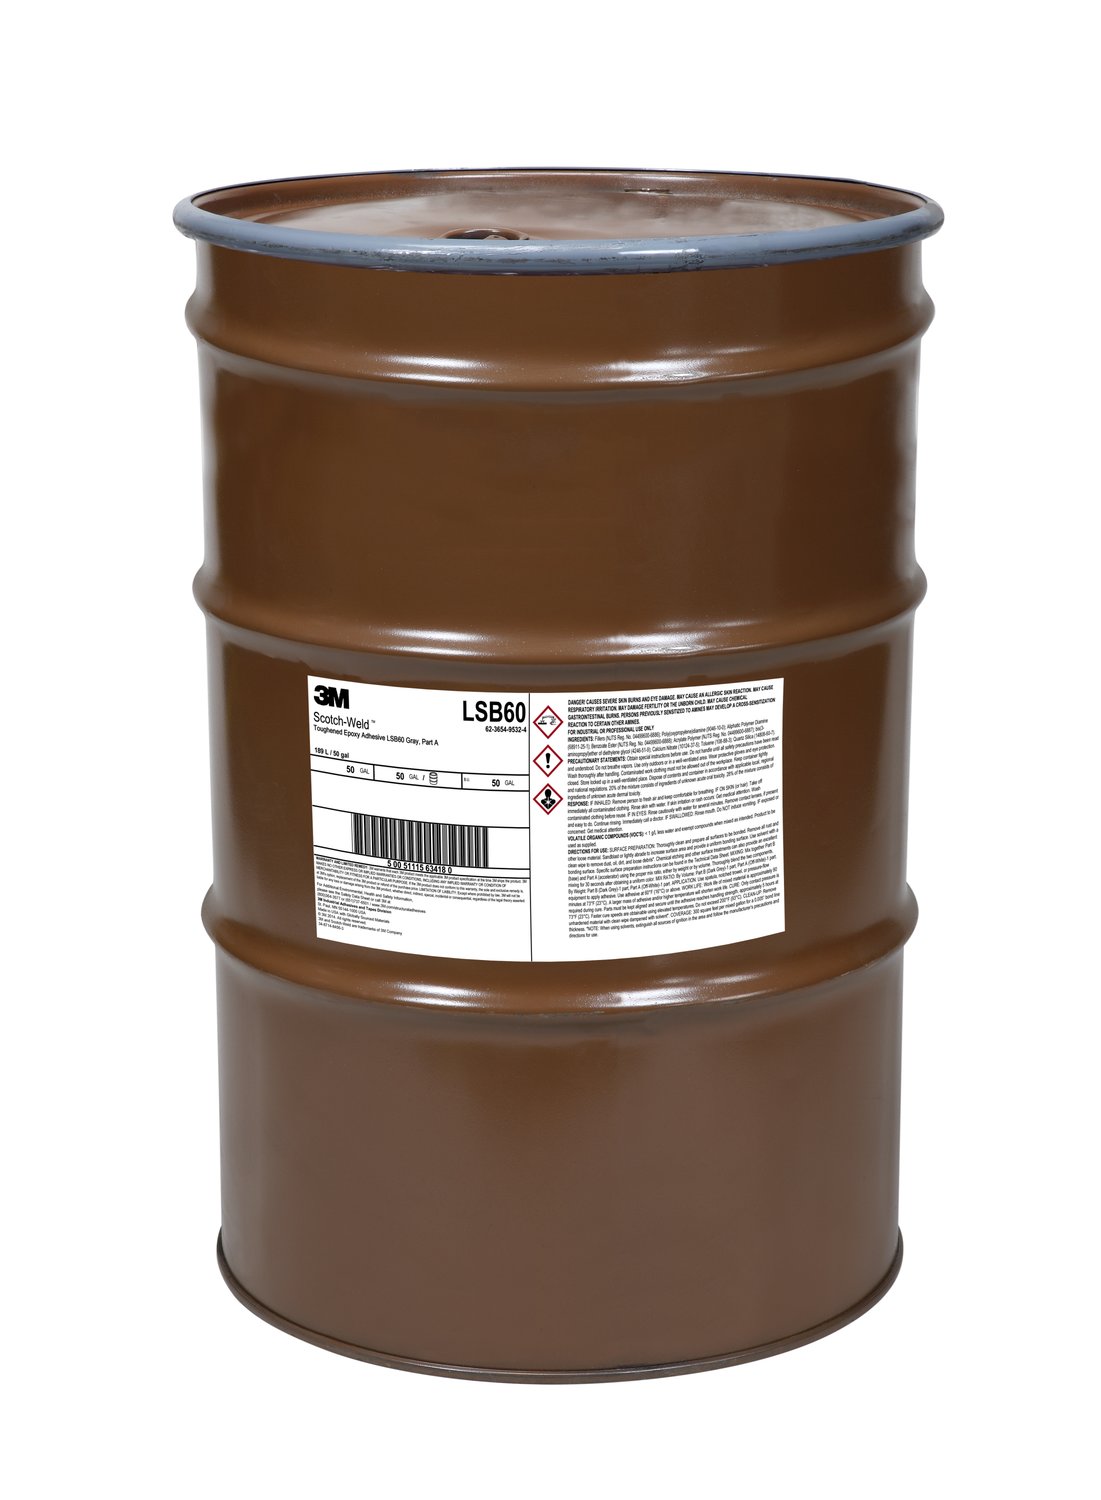 7010366162 - 3M Scotch-Weld Toughened Epoxy Adhesive LSB60, Gray, Part A, 55 Gallon
(50 Gallon Net), Drum